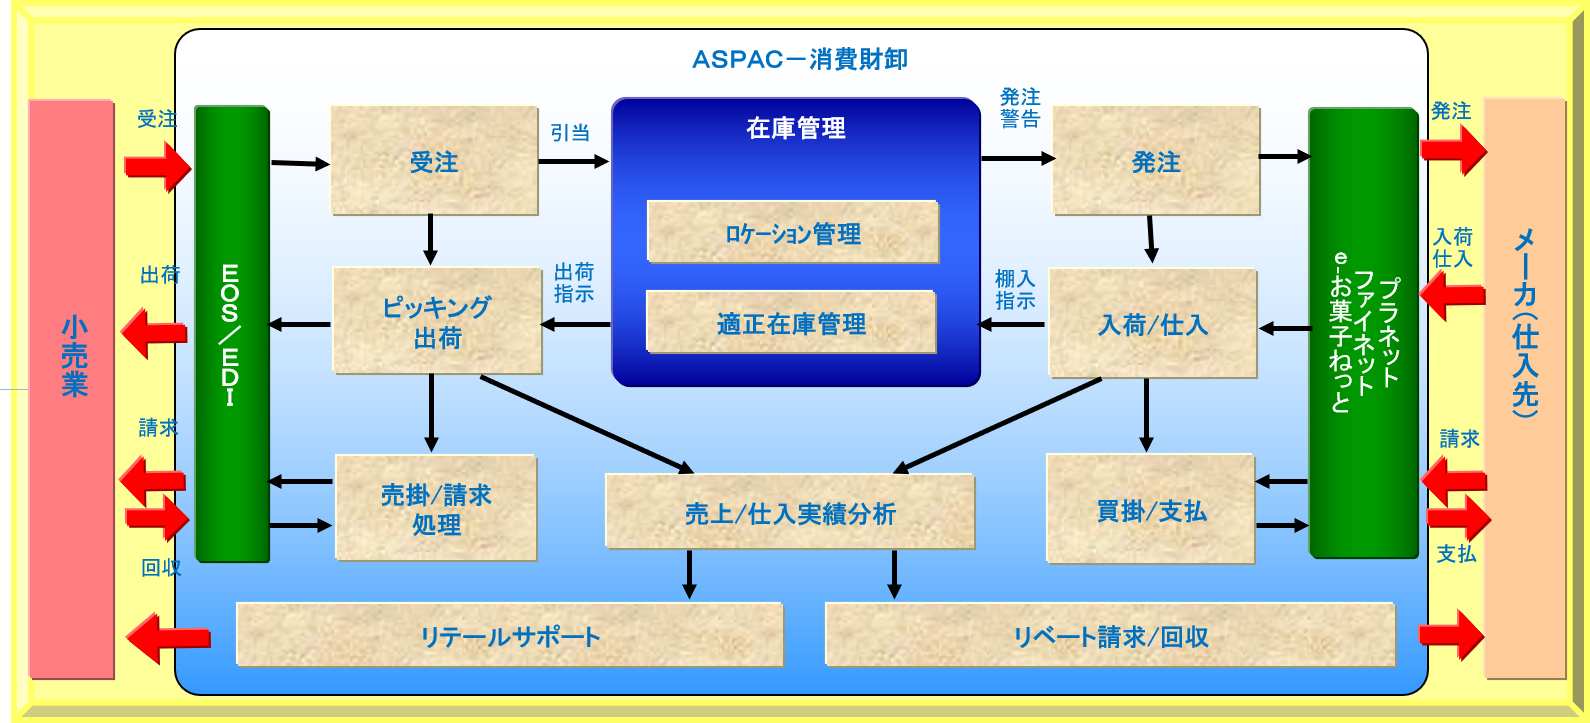 ASPAC_2